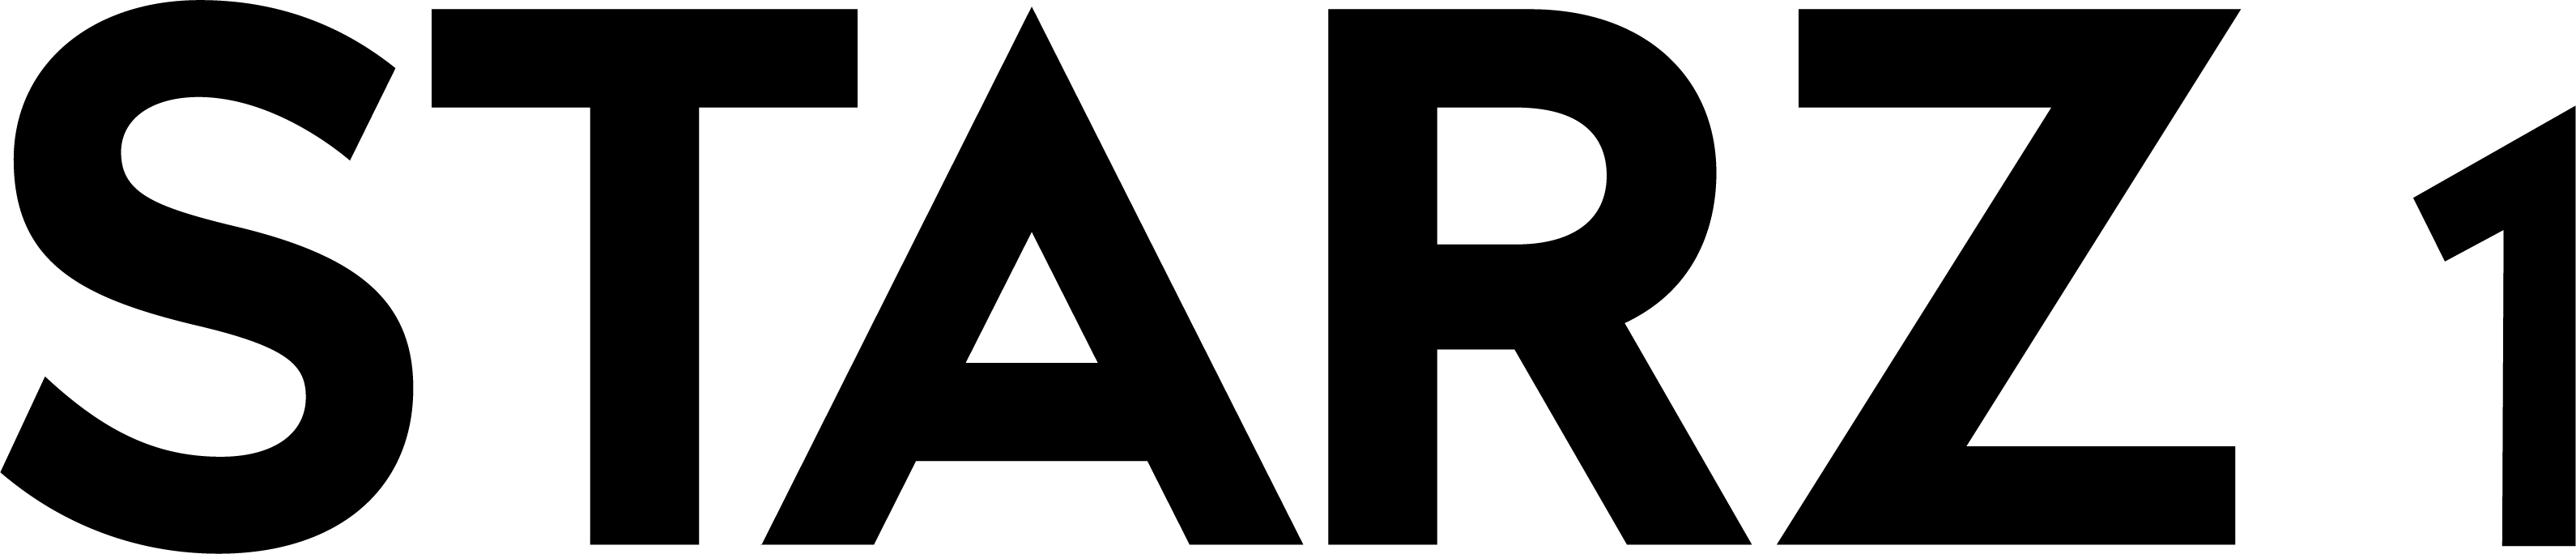 Channel logo for STARZ 1